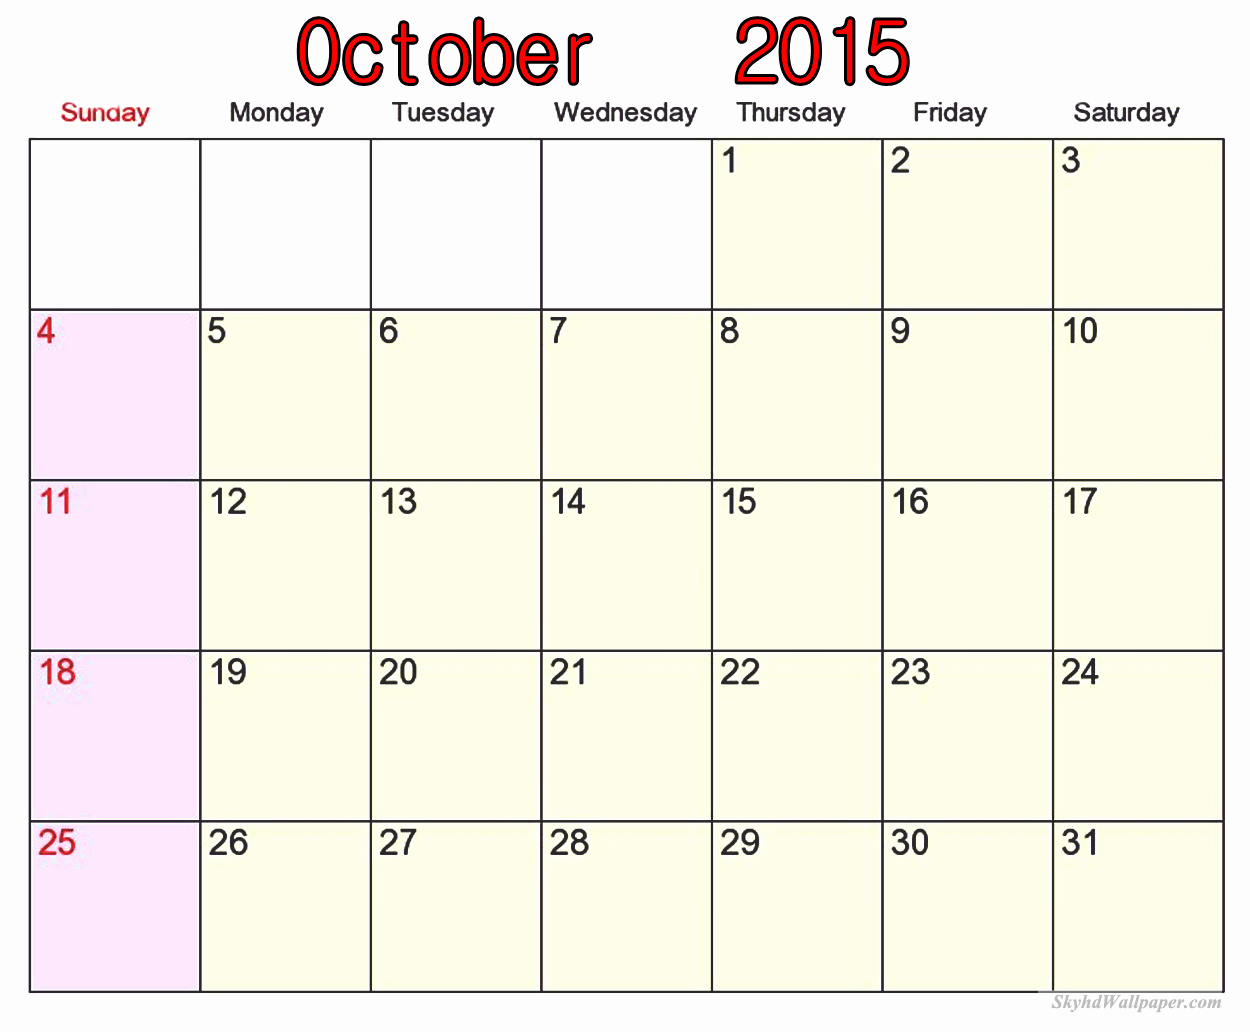 october 2015 calendar template